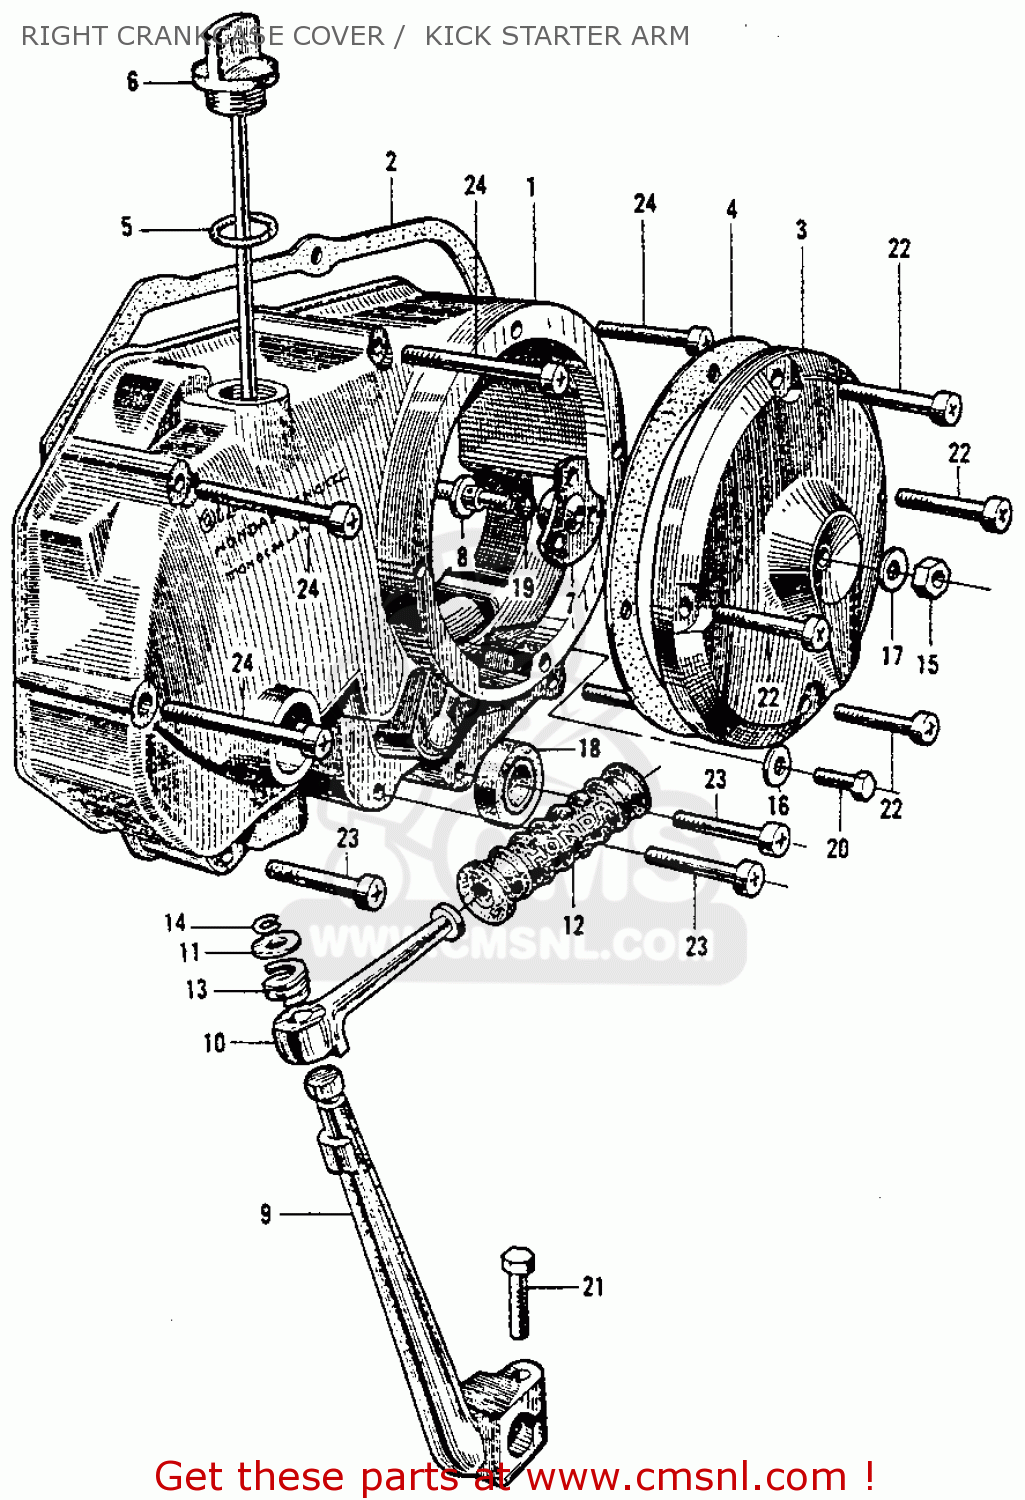 1964 Honda ct200 parts #3